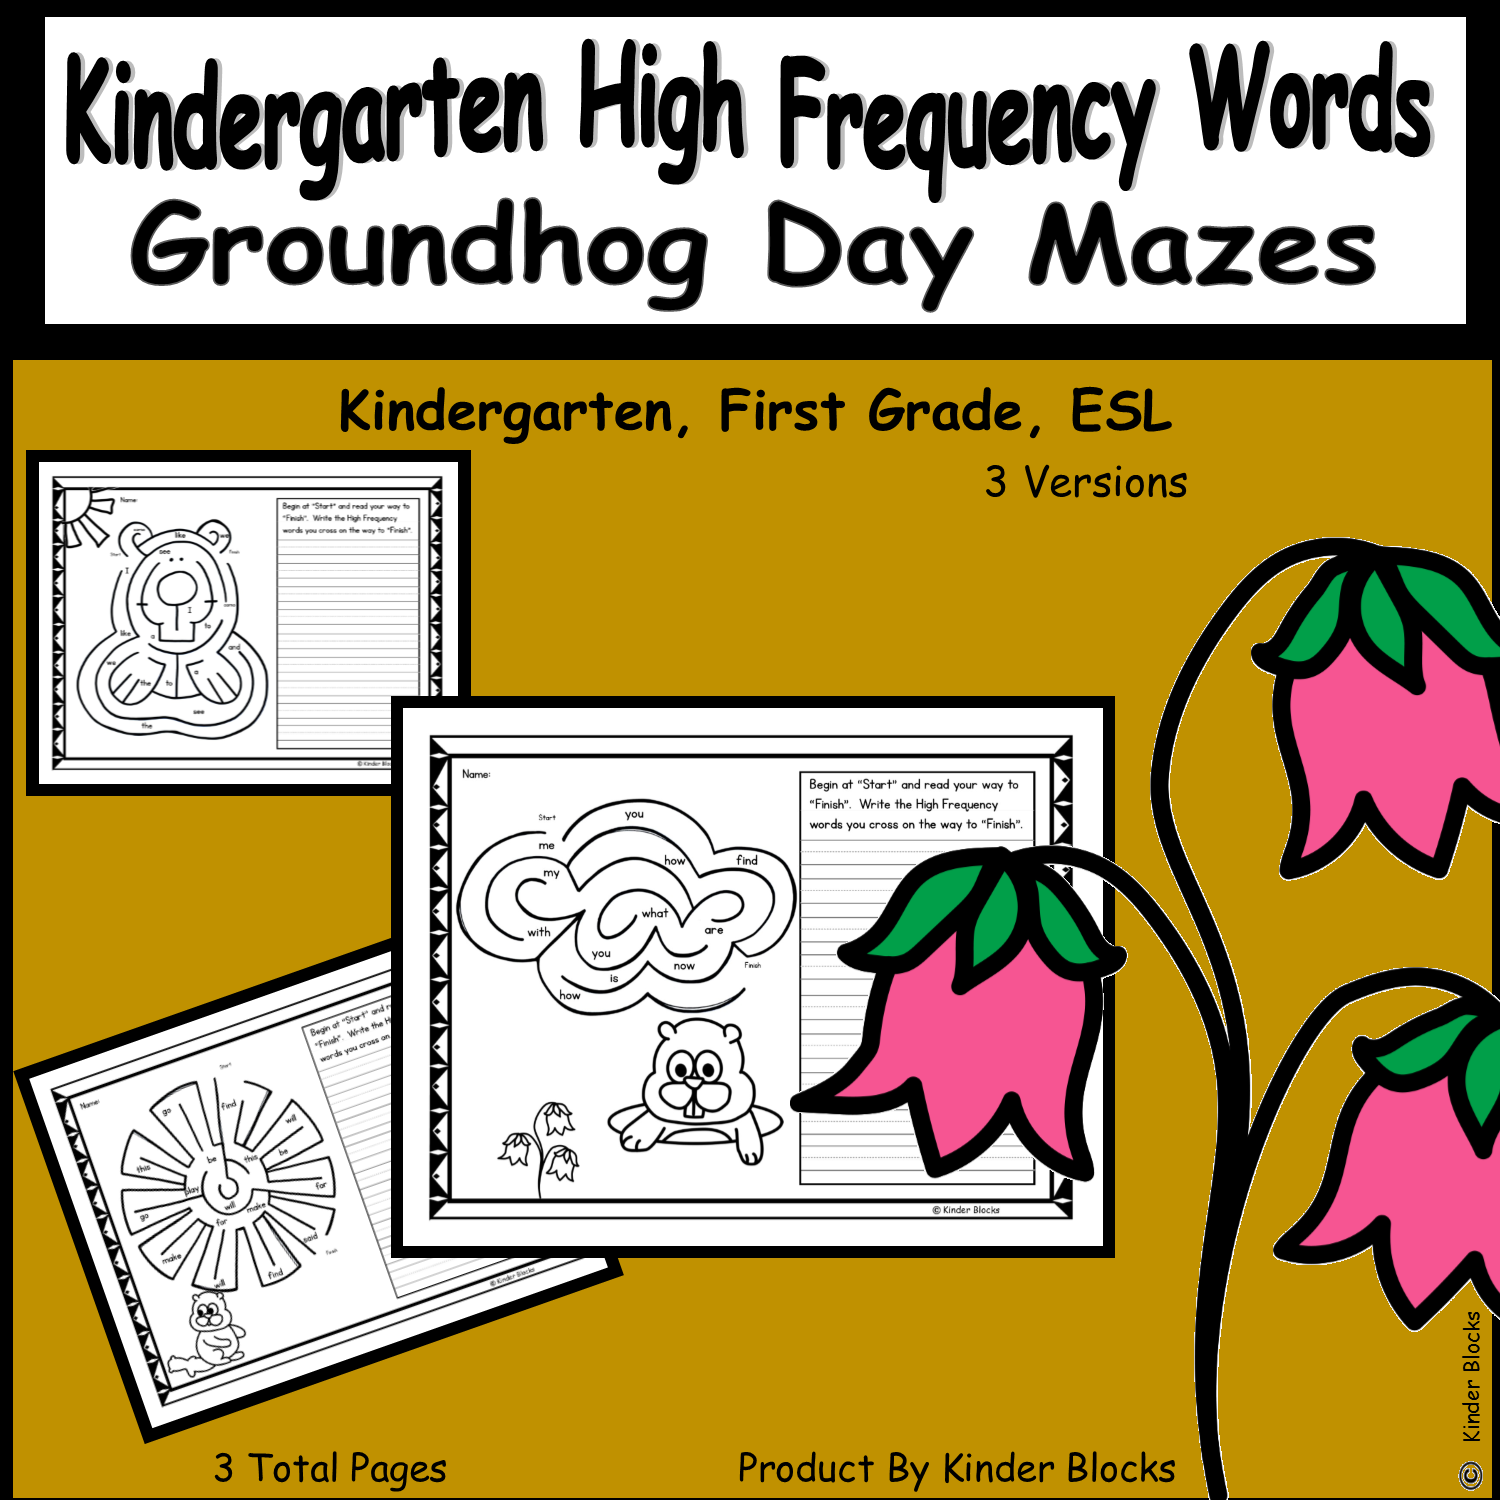 Groundhog day theme kindergarten high frequency word mazes made by teachers